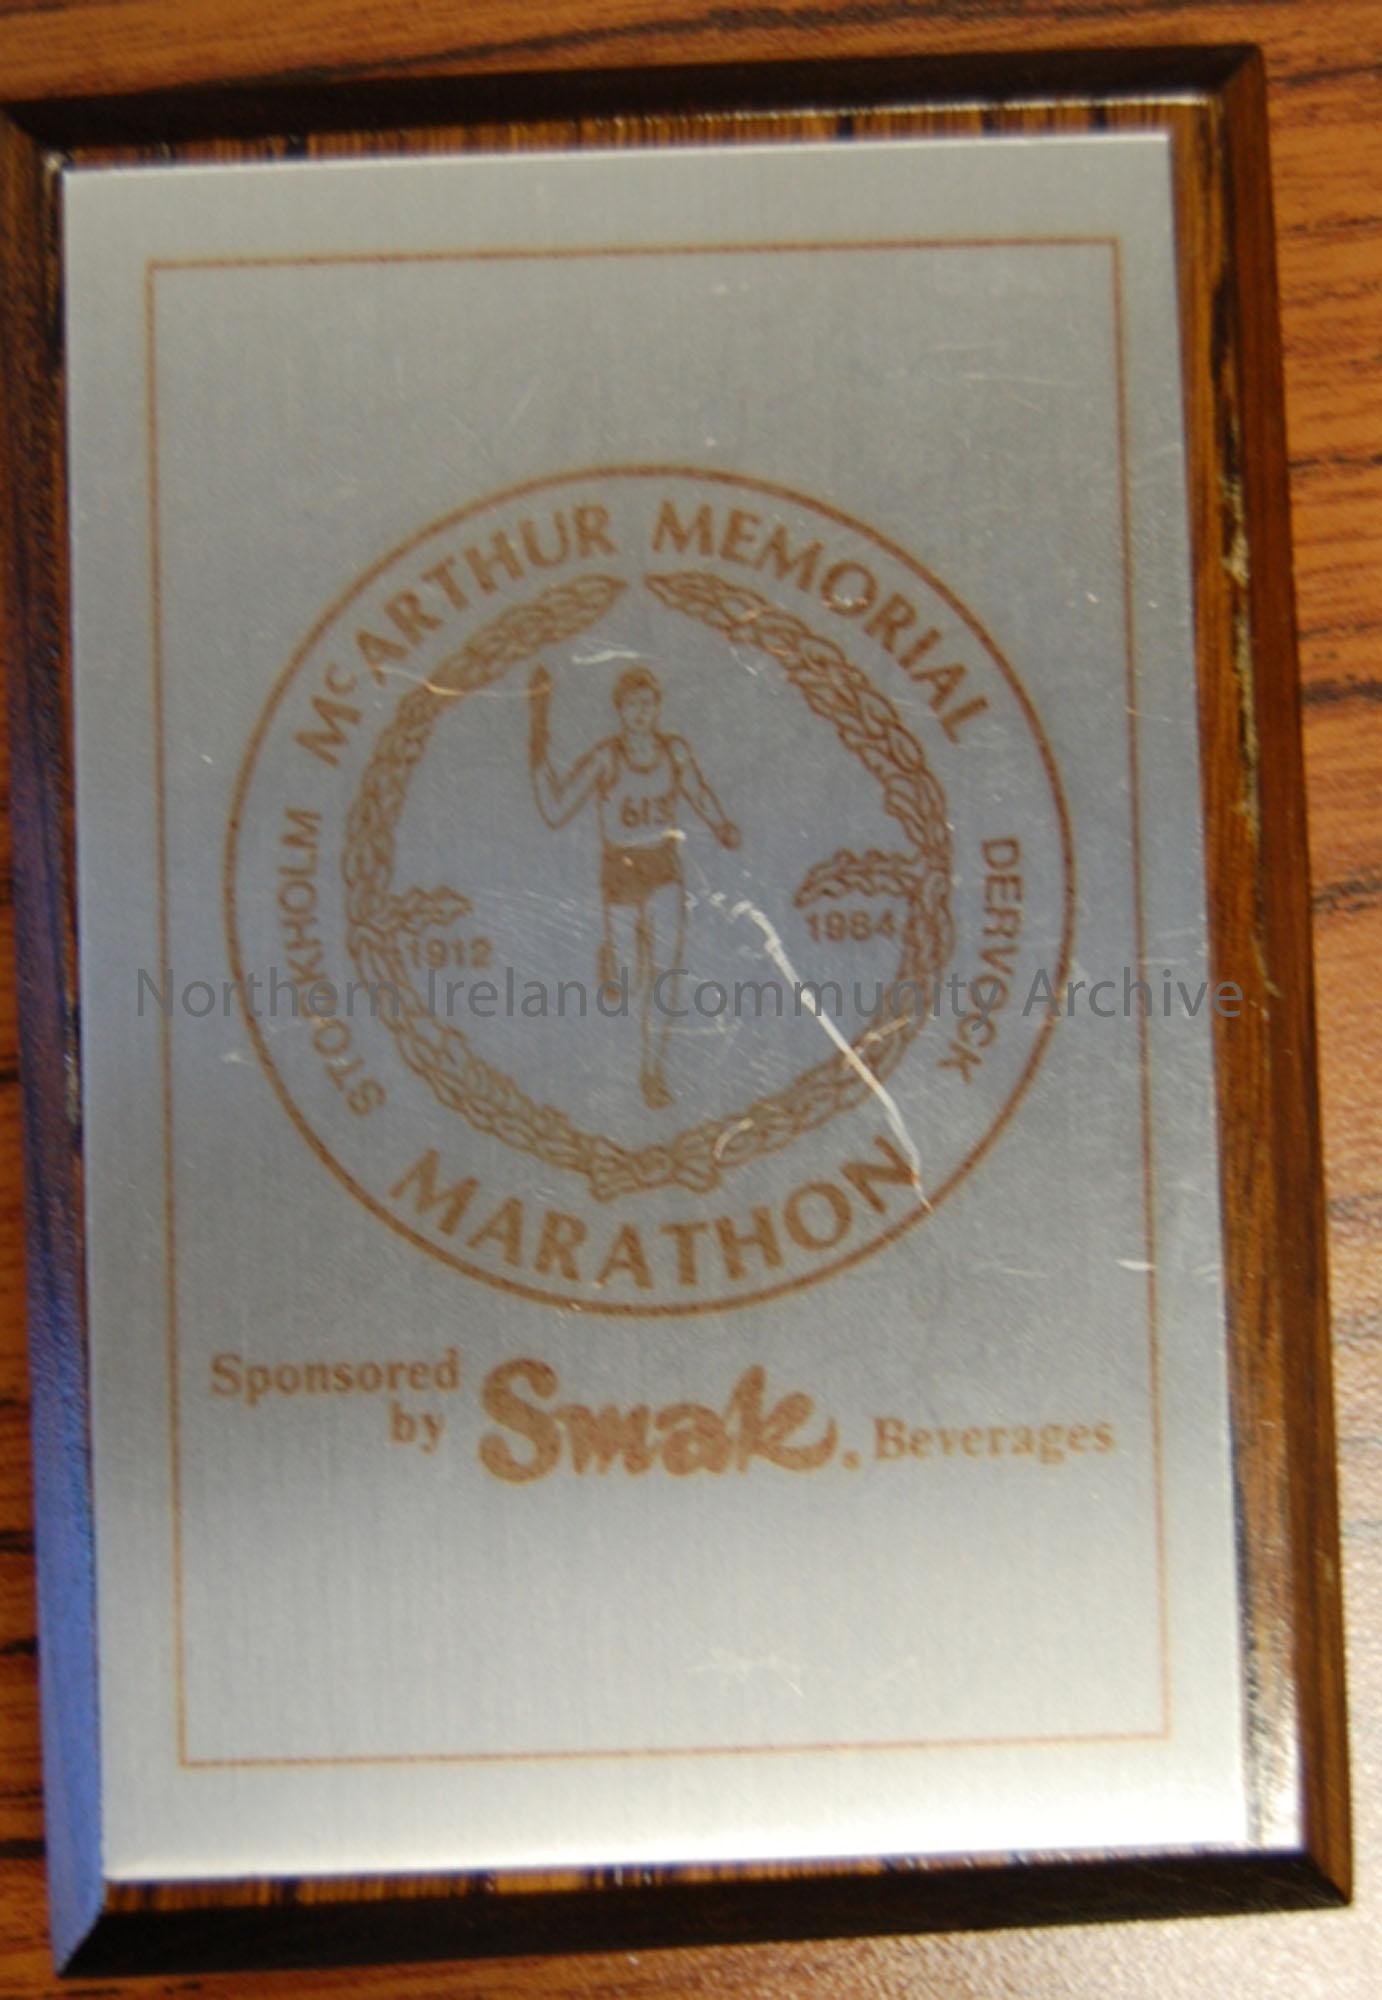 McArthur Memorial Marathon July 14th 1984 finishers plaque sponsored by Smak beverages.